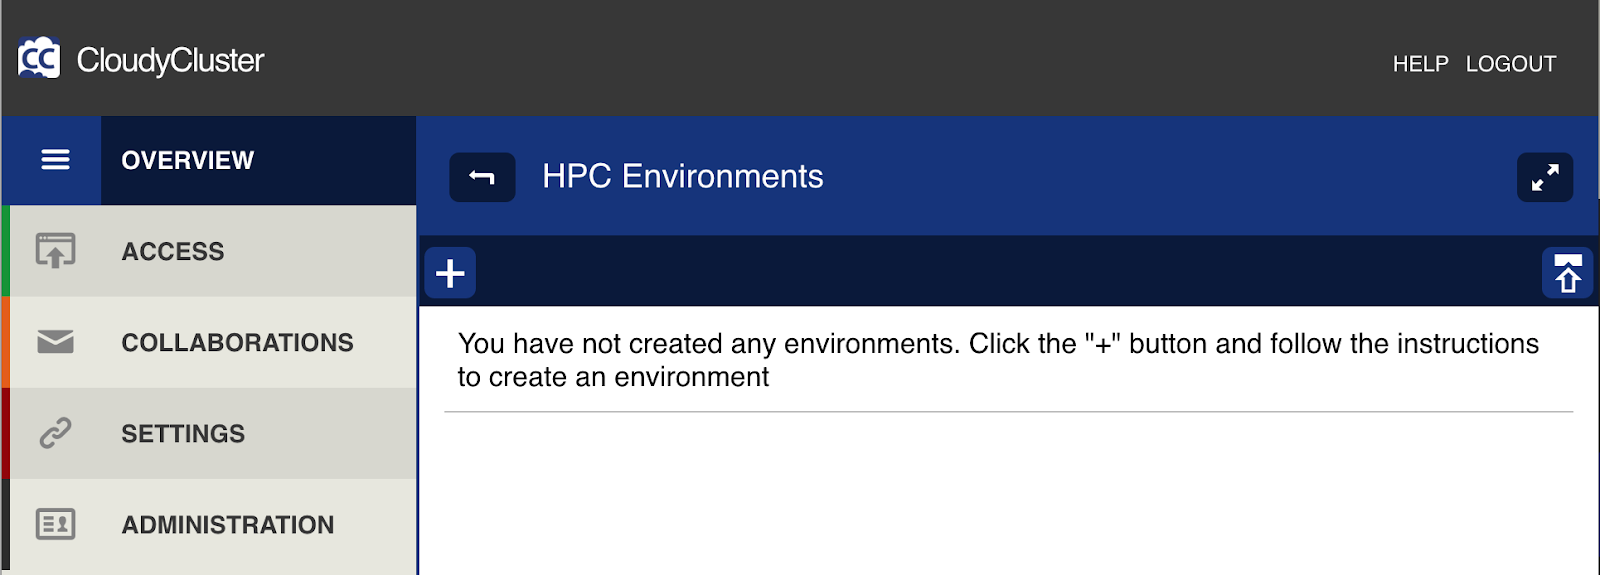 HPC Environments page